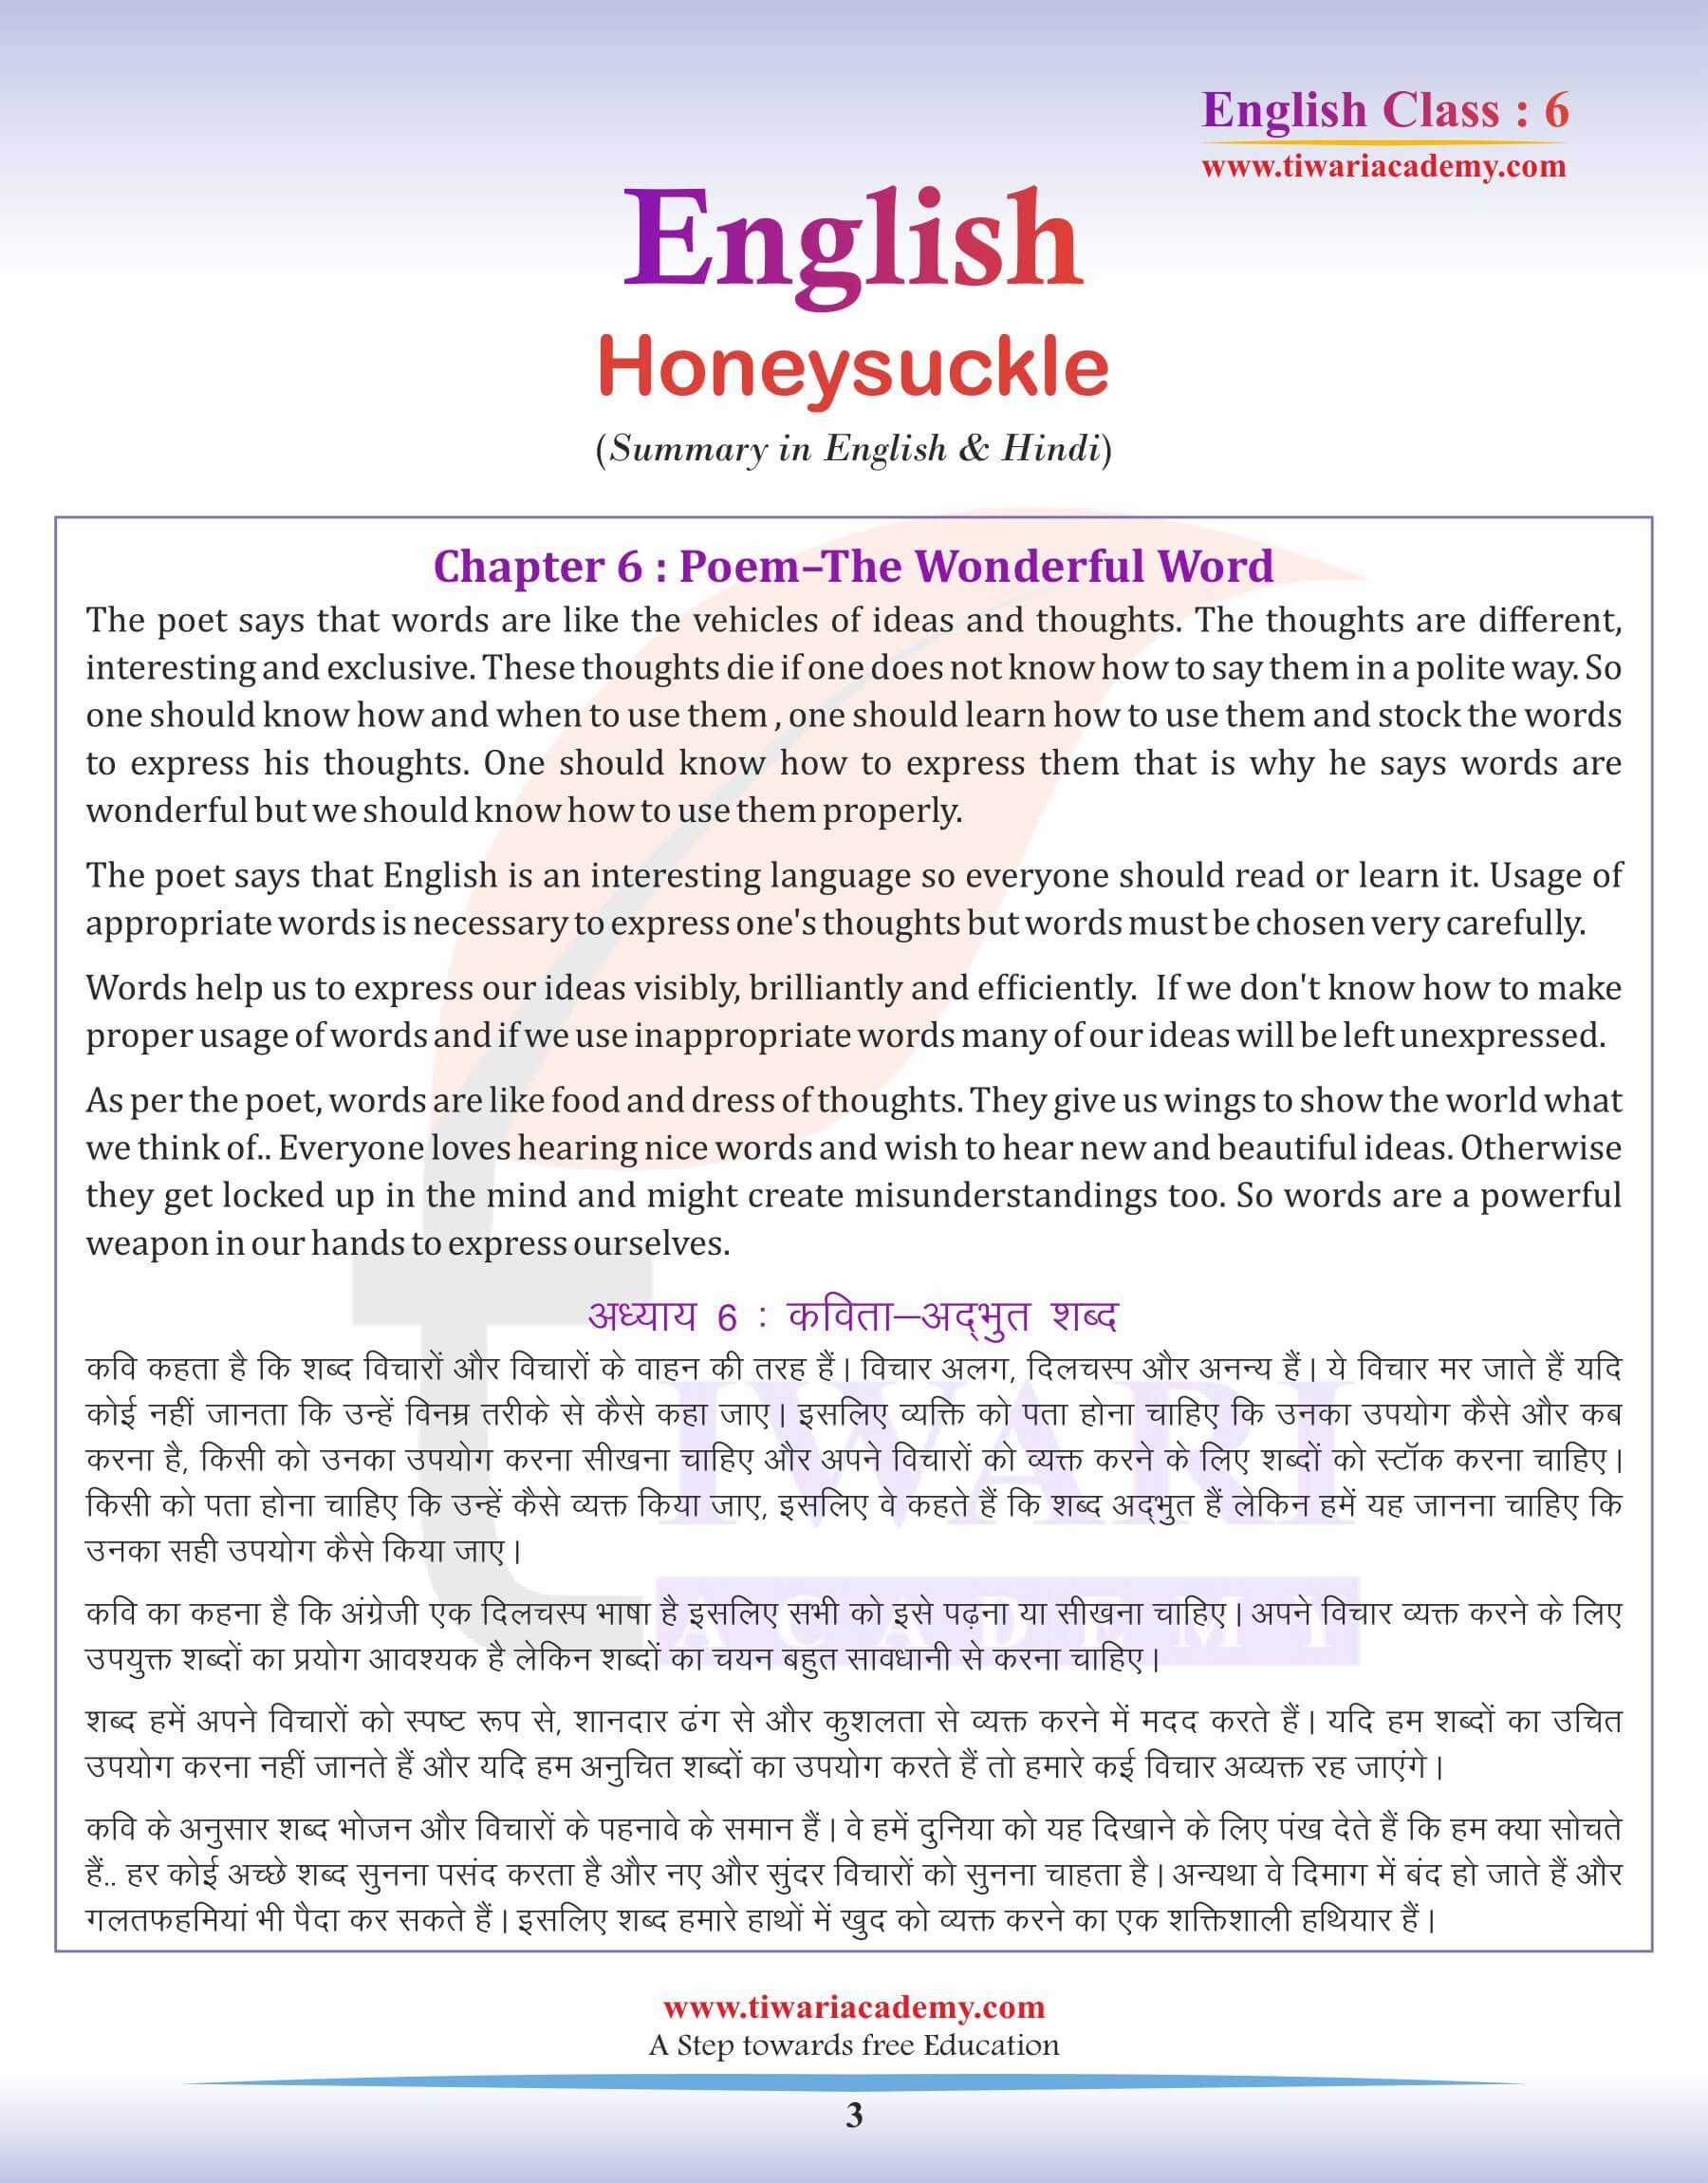 Class 6 English Chapter 6 Poem Summary in Hindi & English